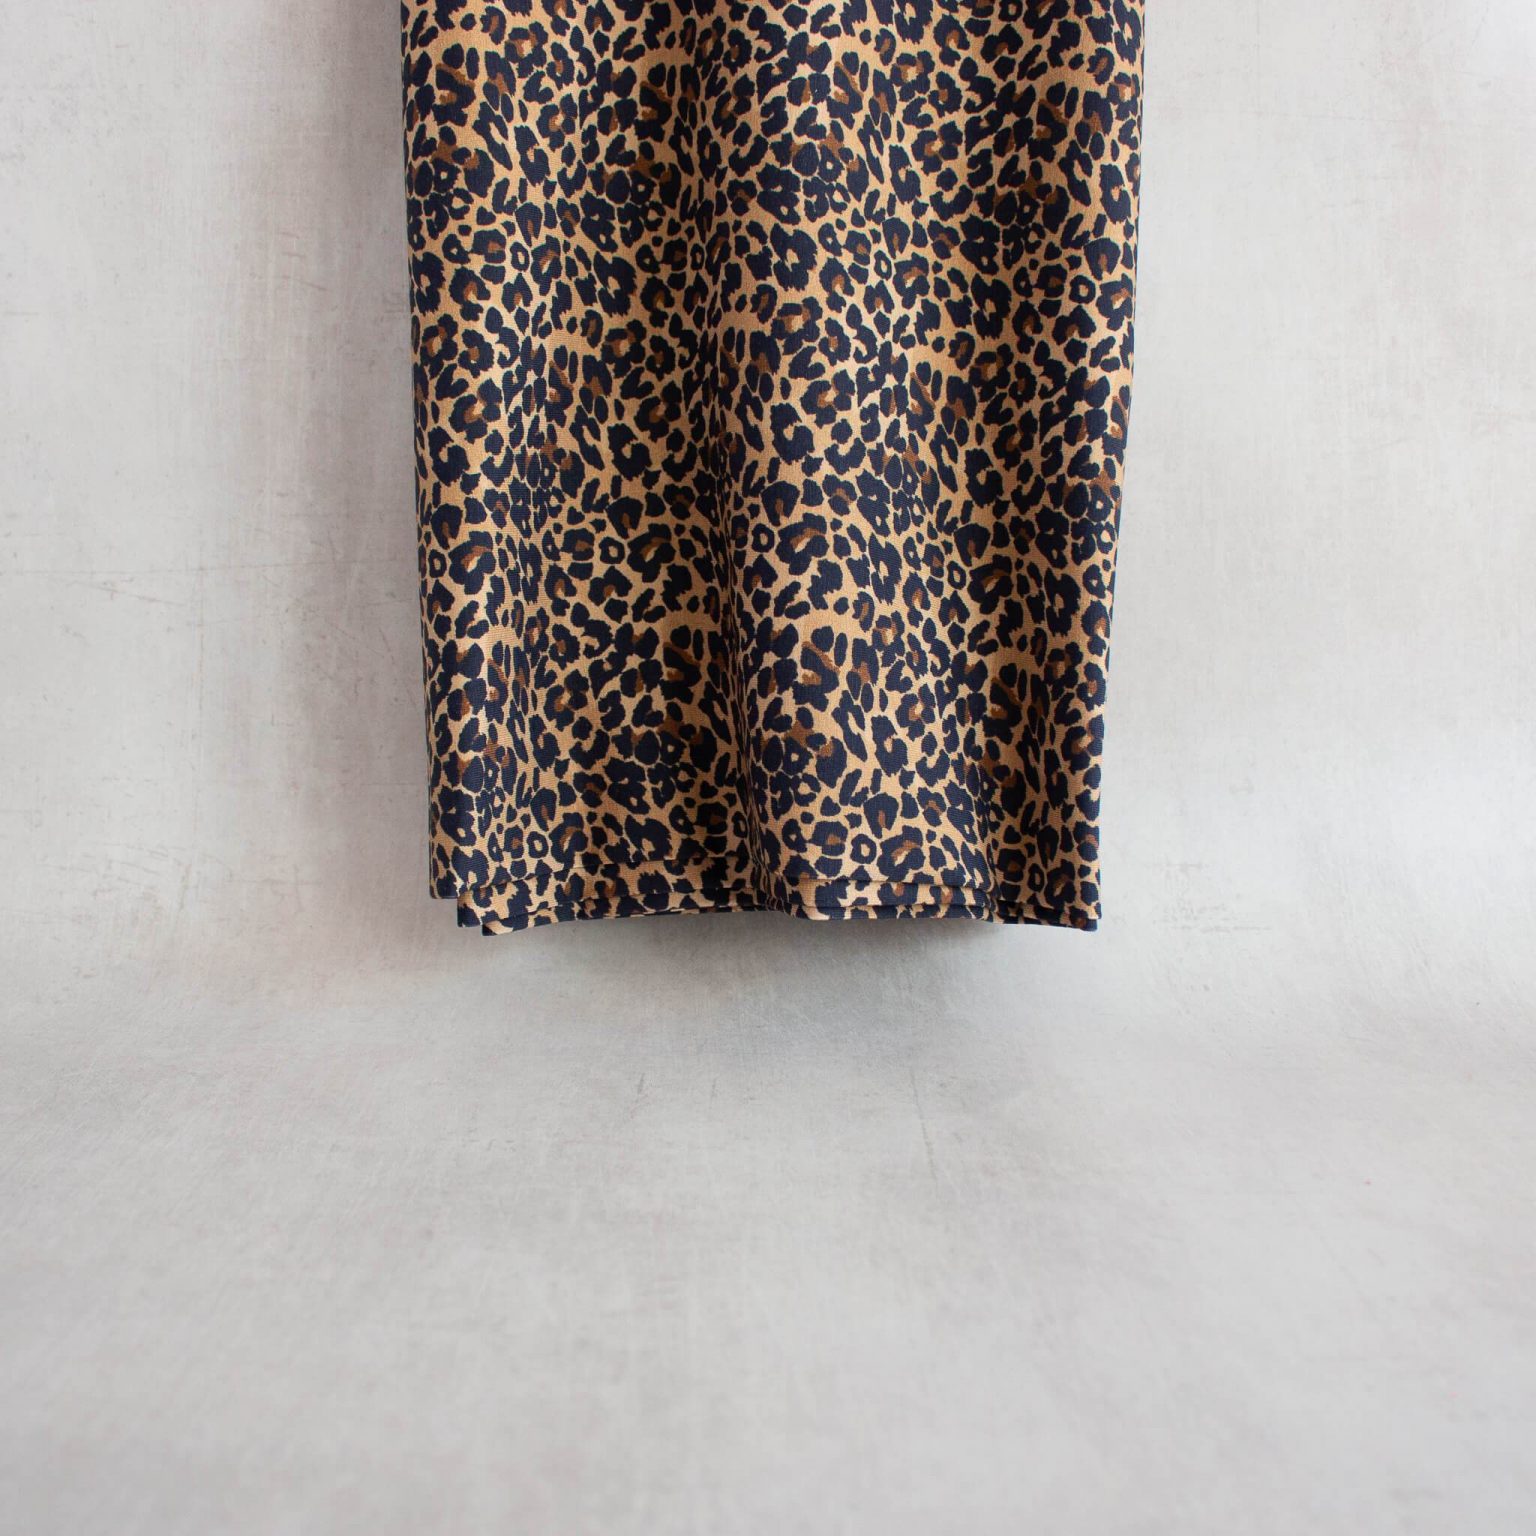 Leopard print jersey fabric hanging straight